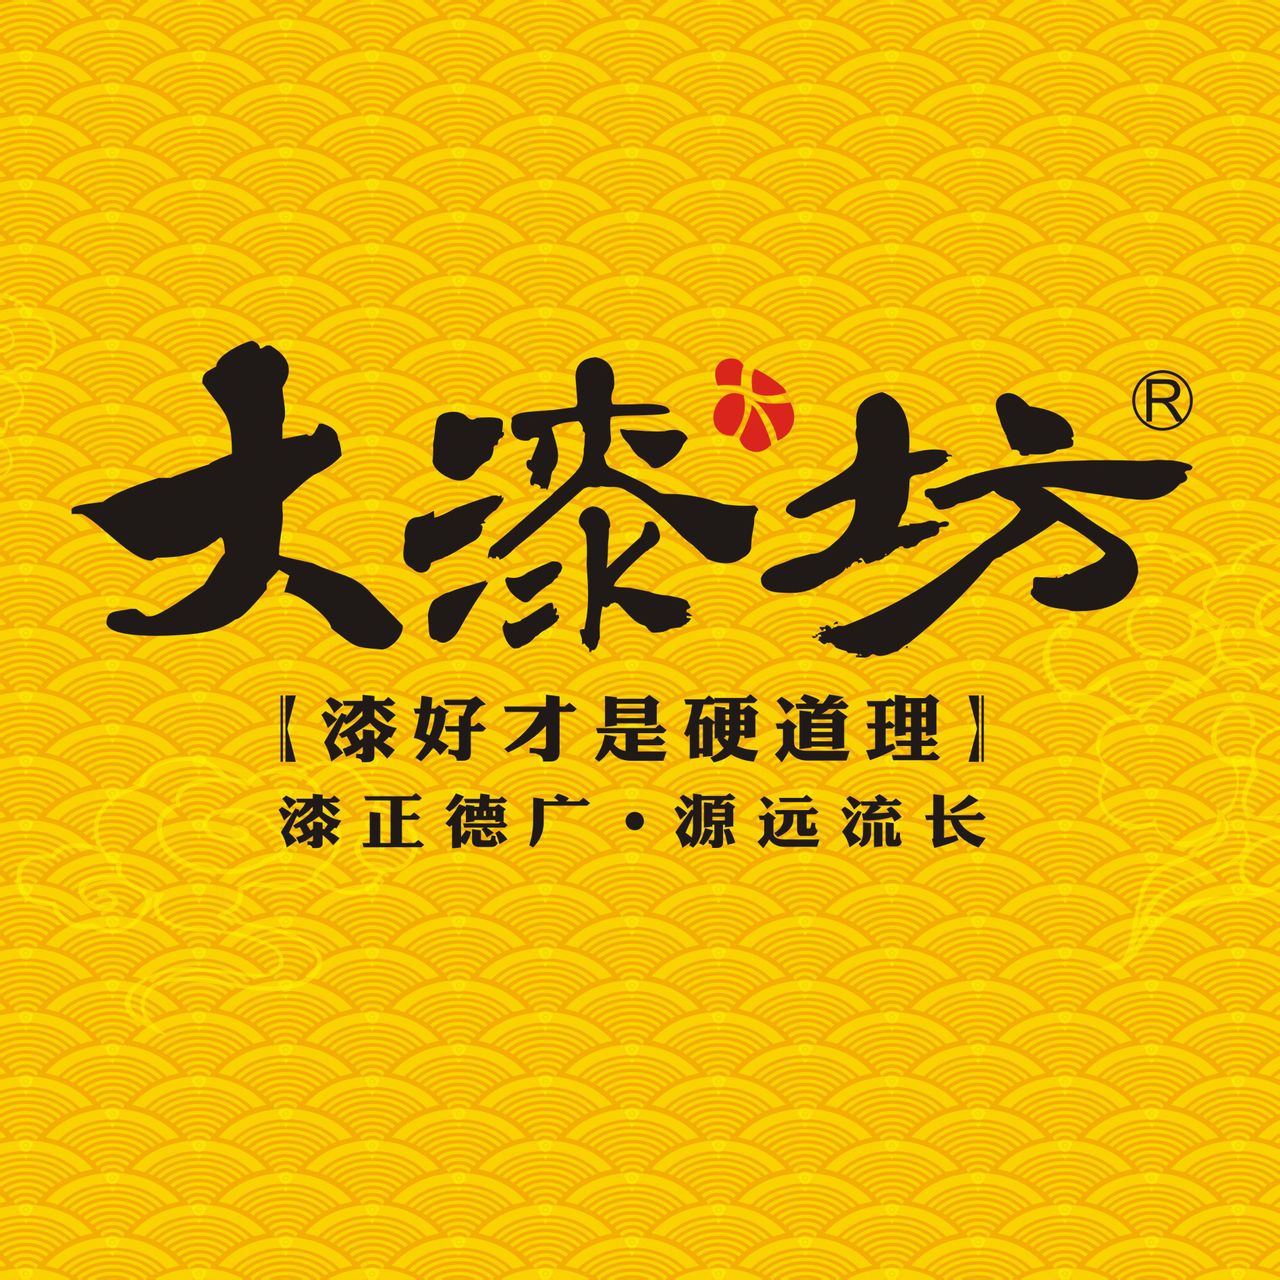 大漆坊 logo